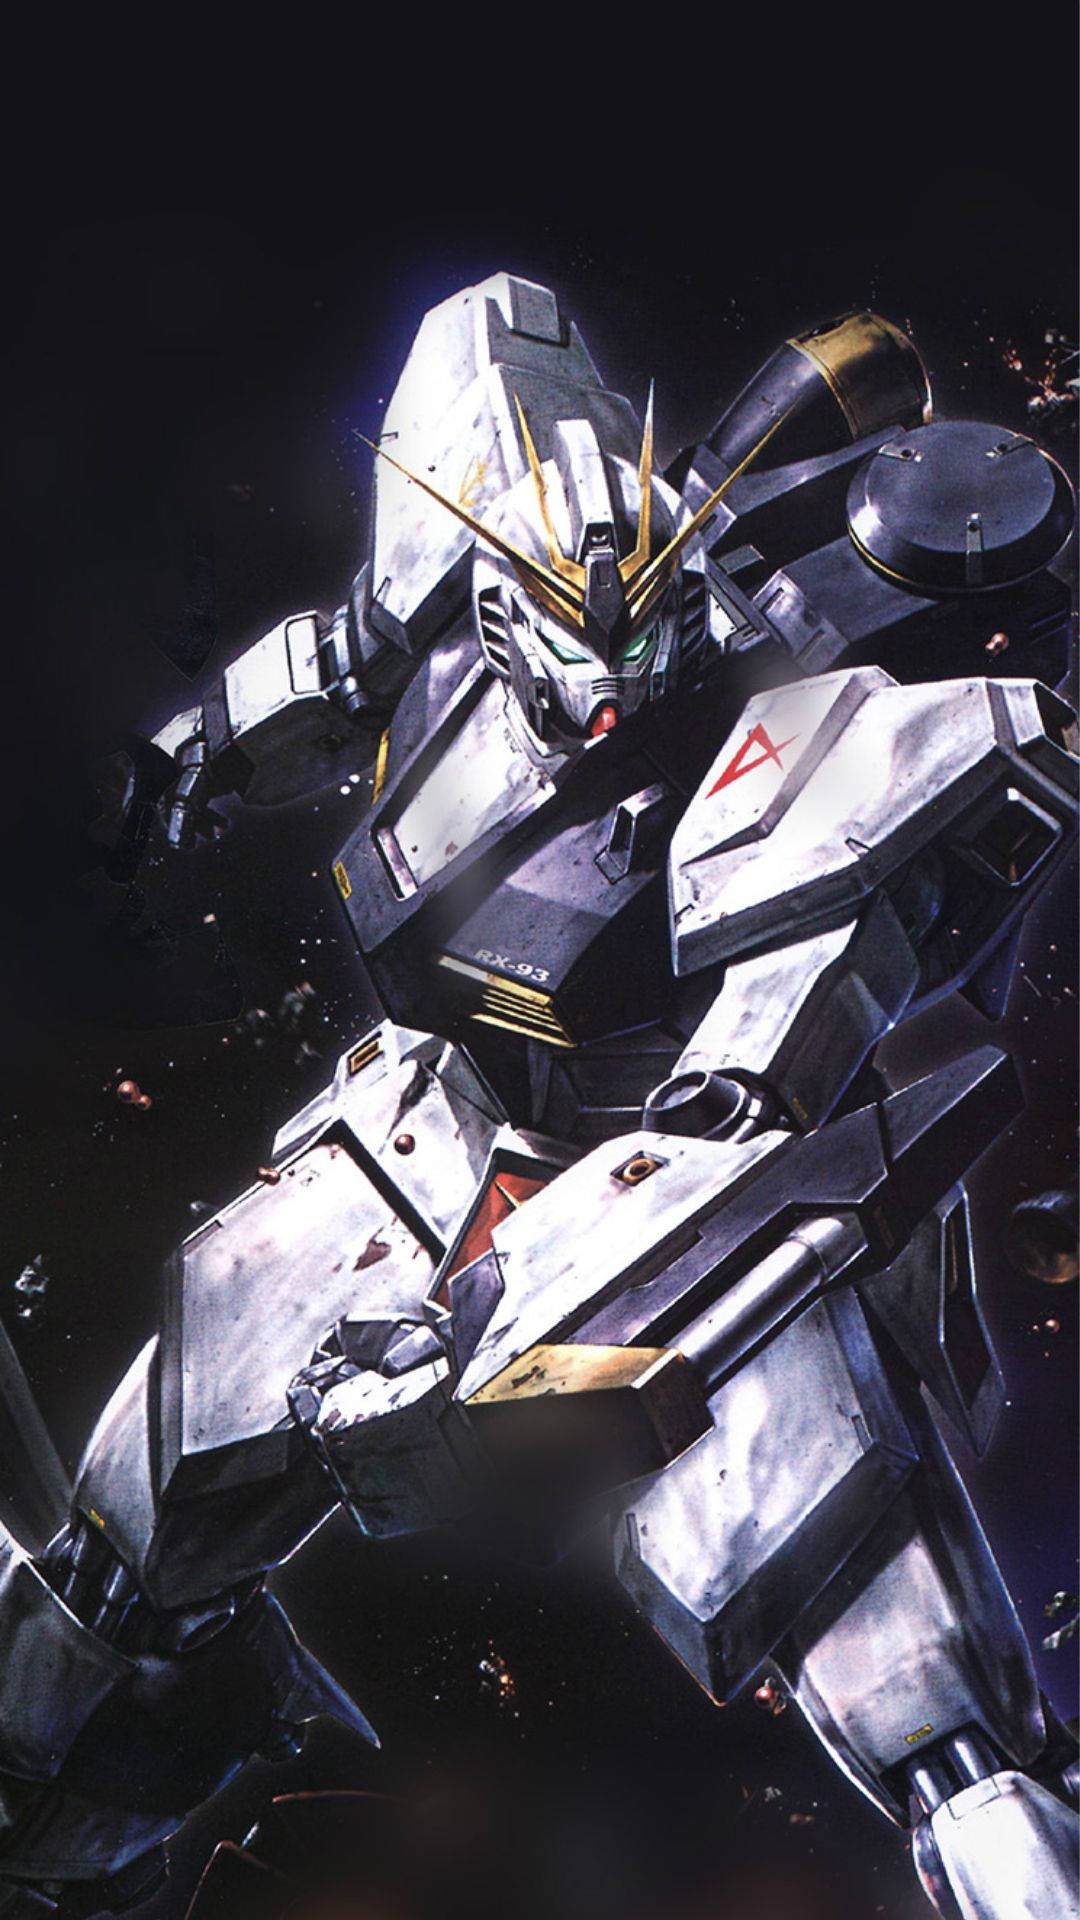 Gundam 1080X1920 Wallpaper and Background Image